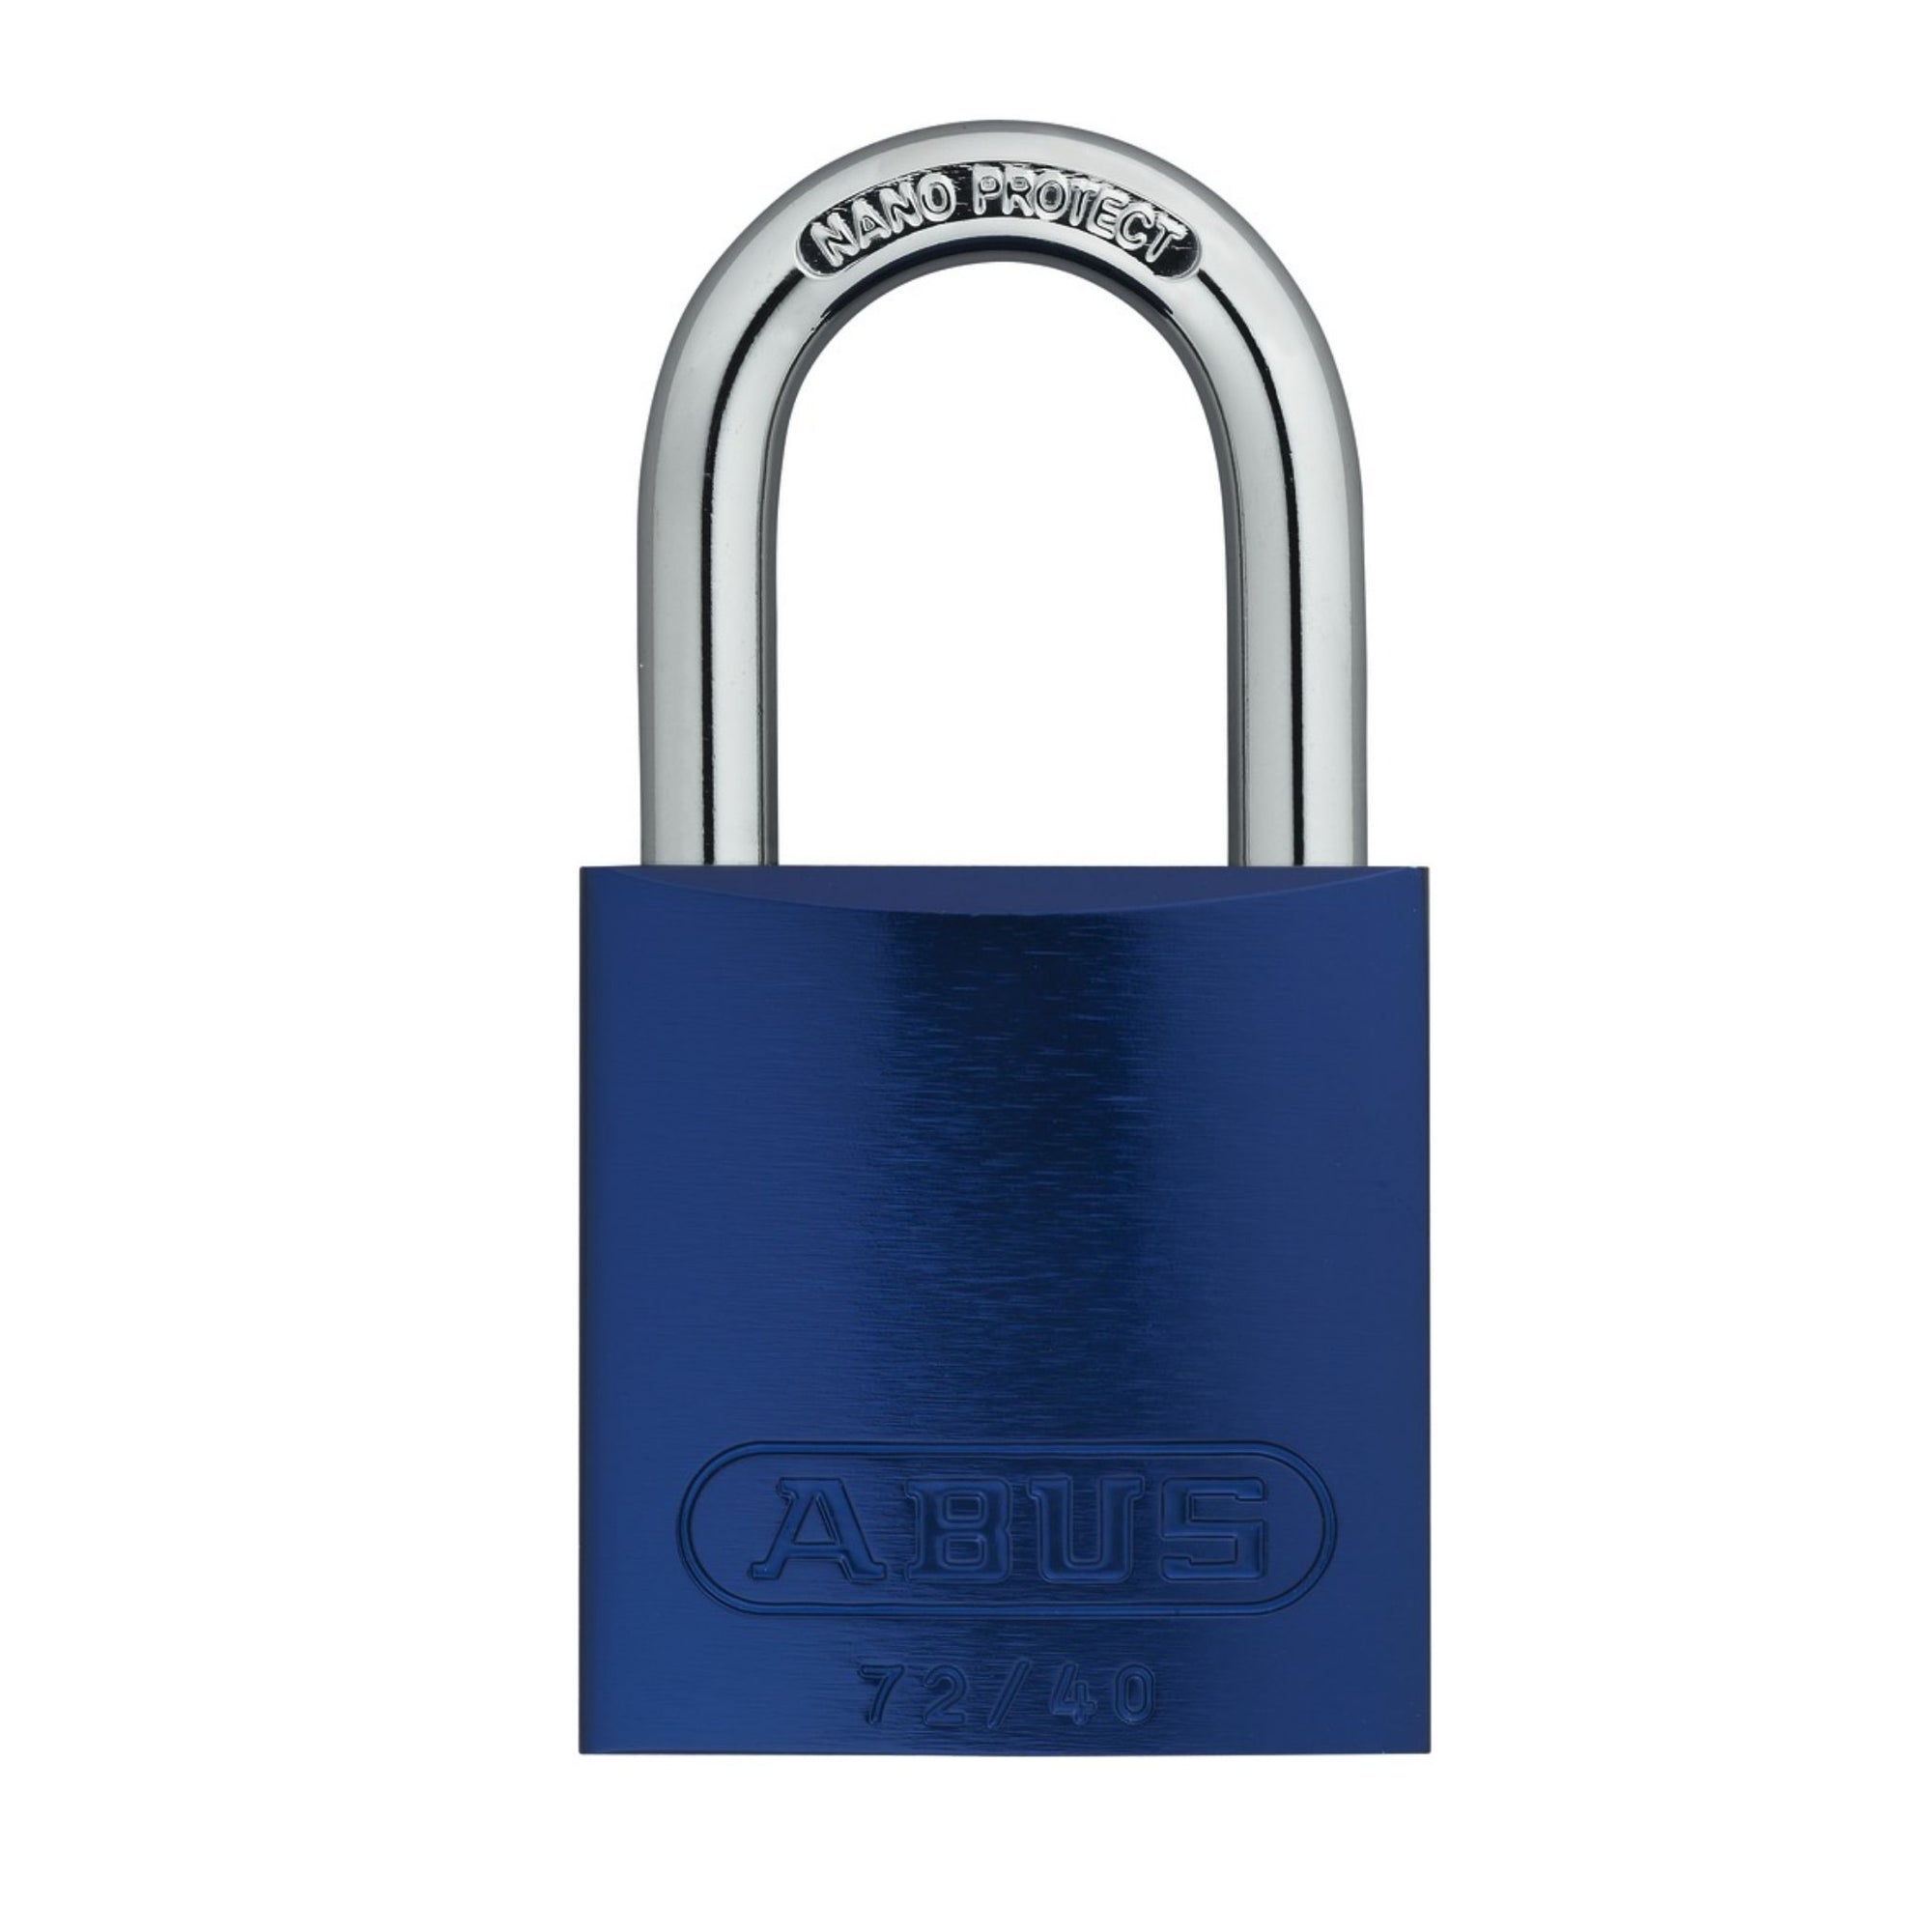 Abus 72/40 KA TT00036 Blue Titalium Safety Padlock with 1-Inch Shackle, Keyed Alike to Match Existing Key Number KATT00036 - The Lock Source 